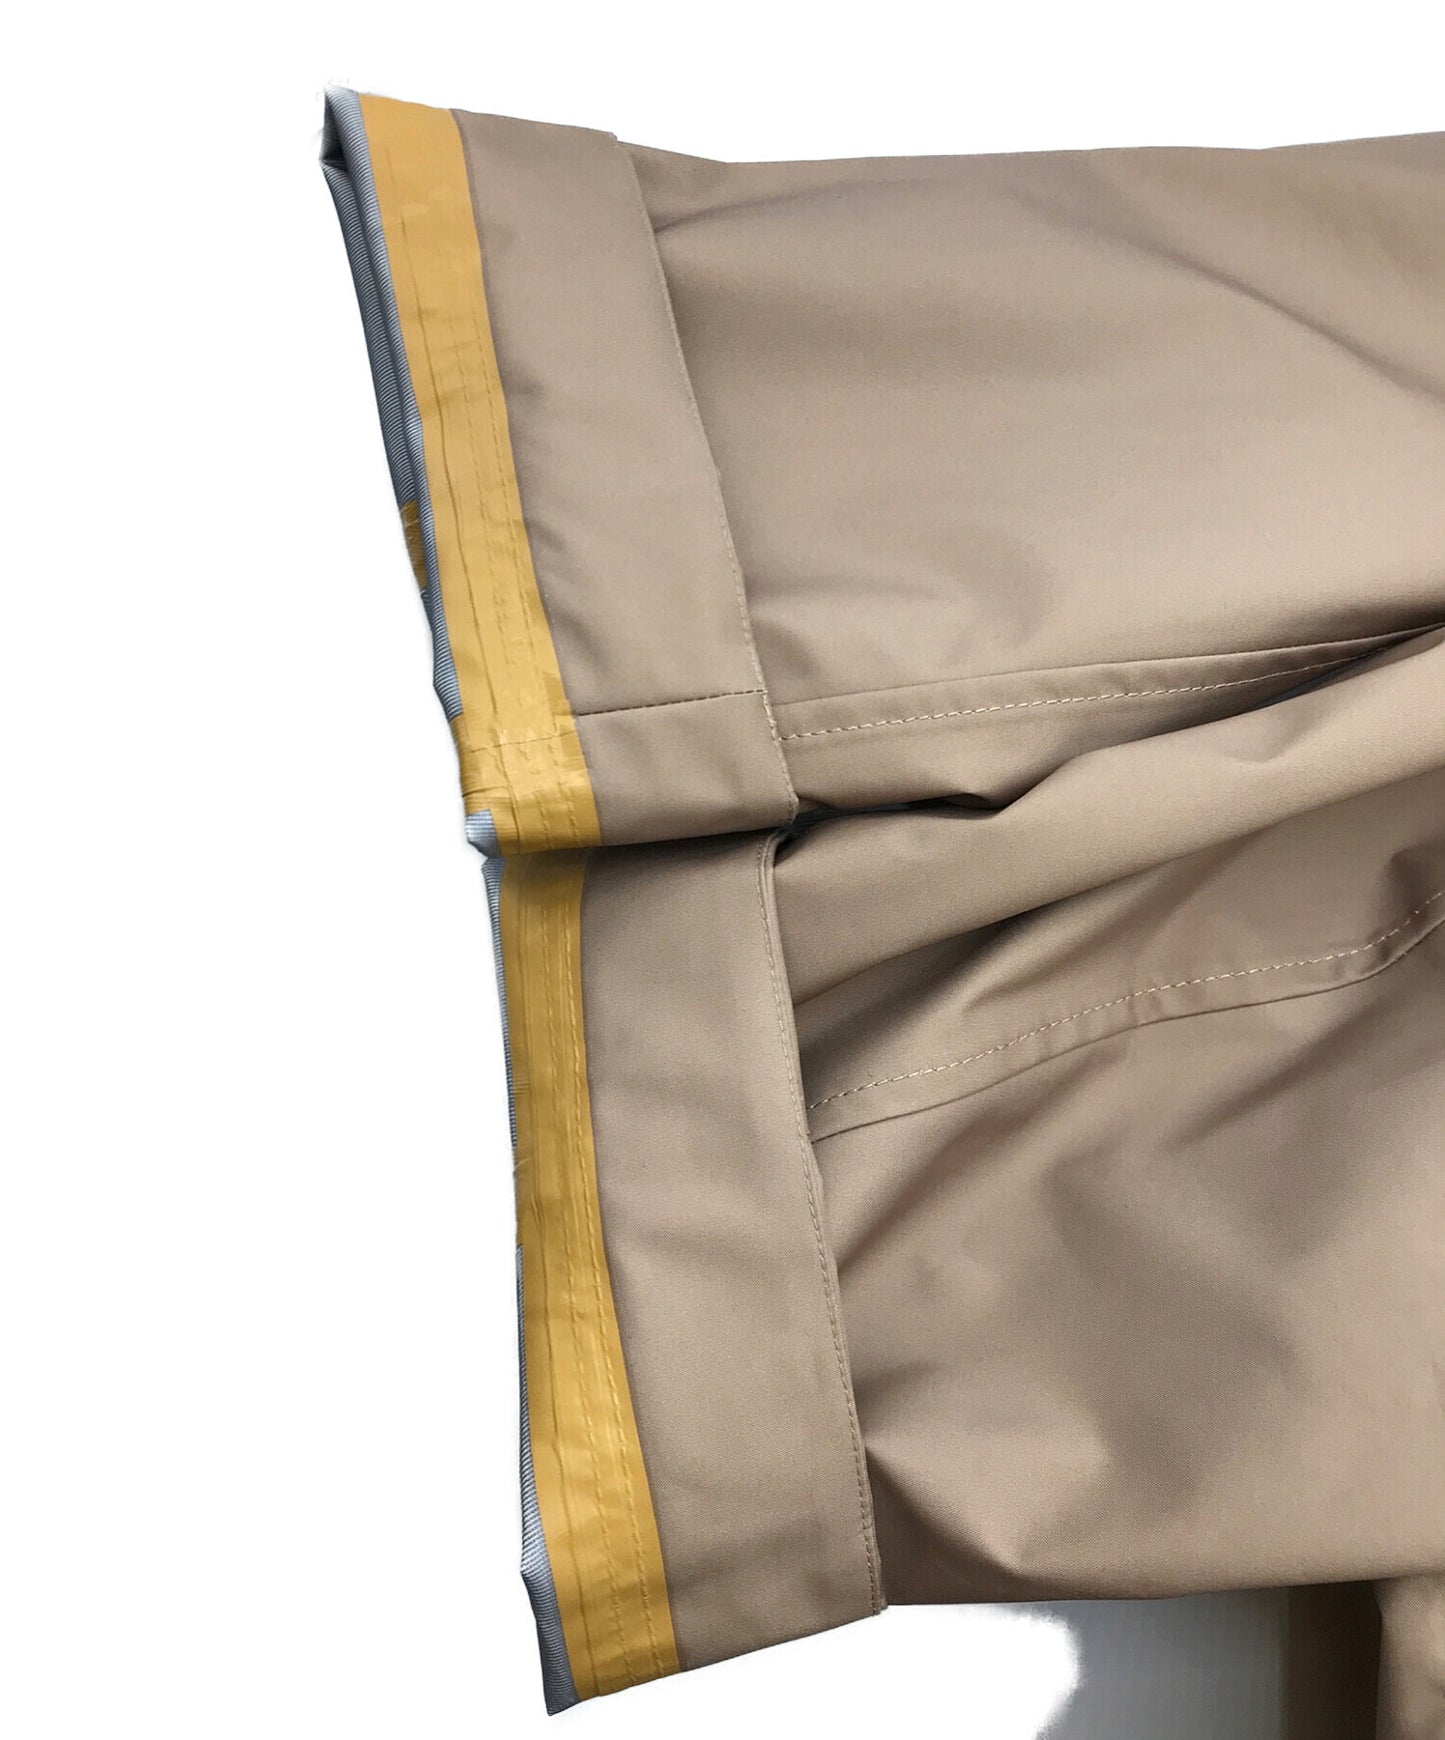 [Pre-owned] UNDERCOVER×EASTPAK Patch Pocket Parka Coat Fishtail Coat Coat UC1B4302